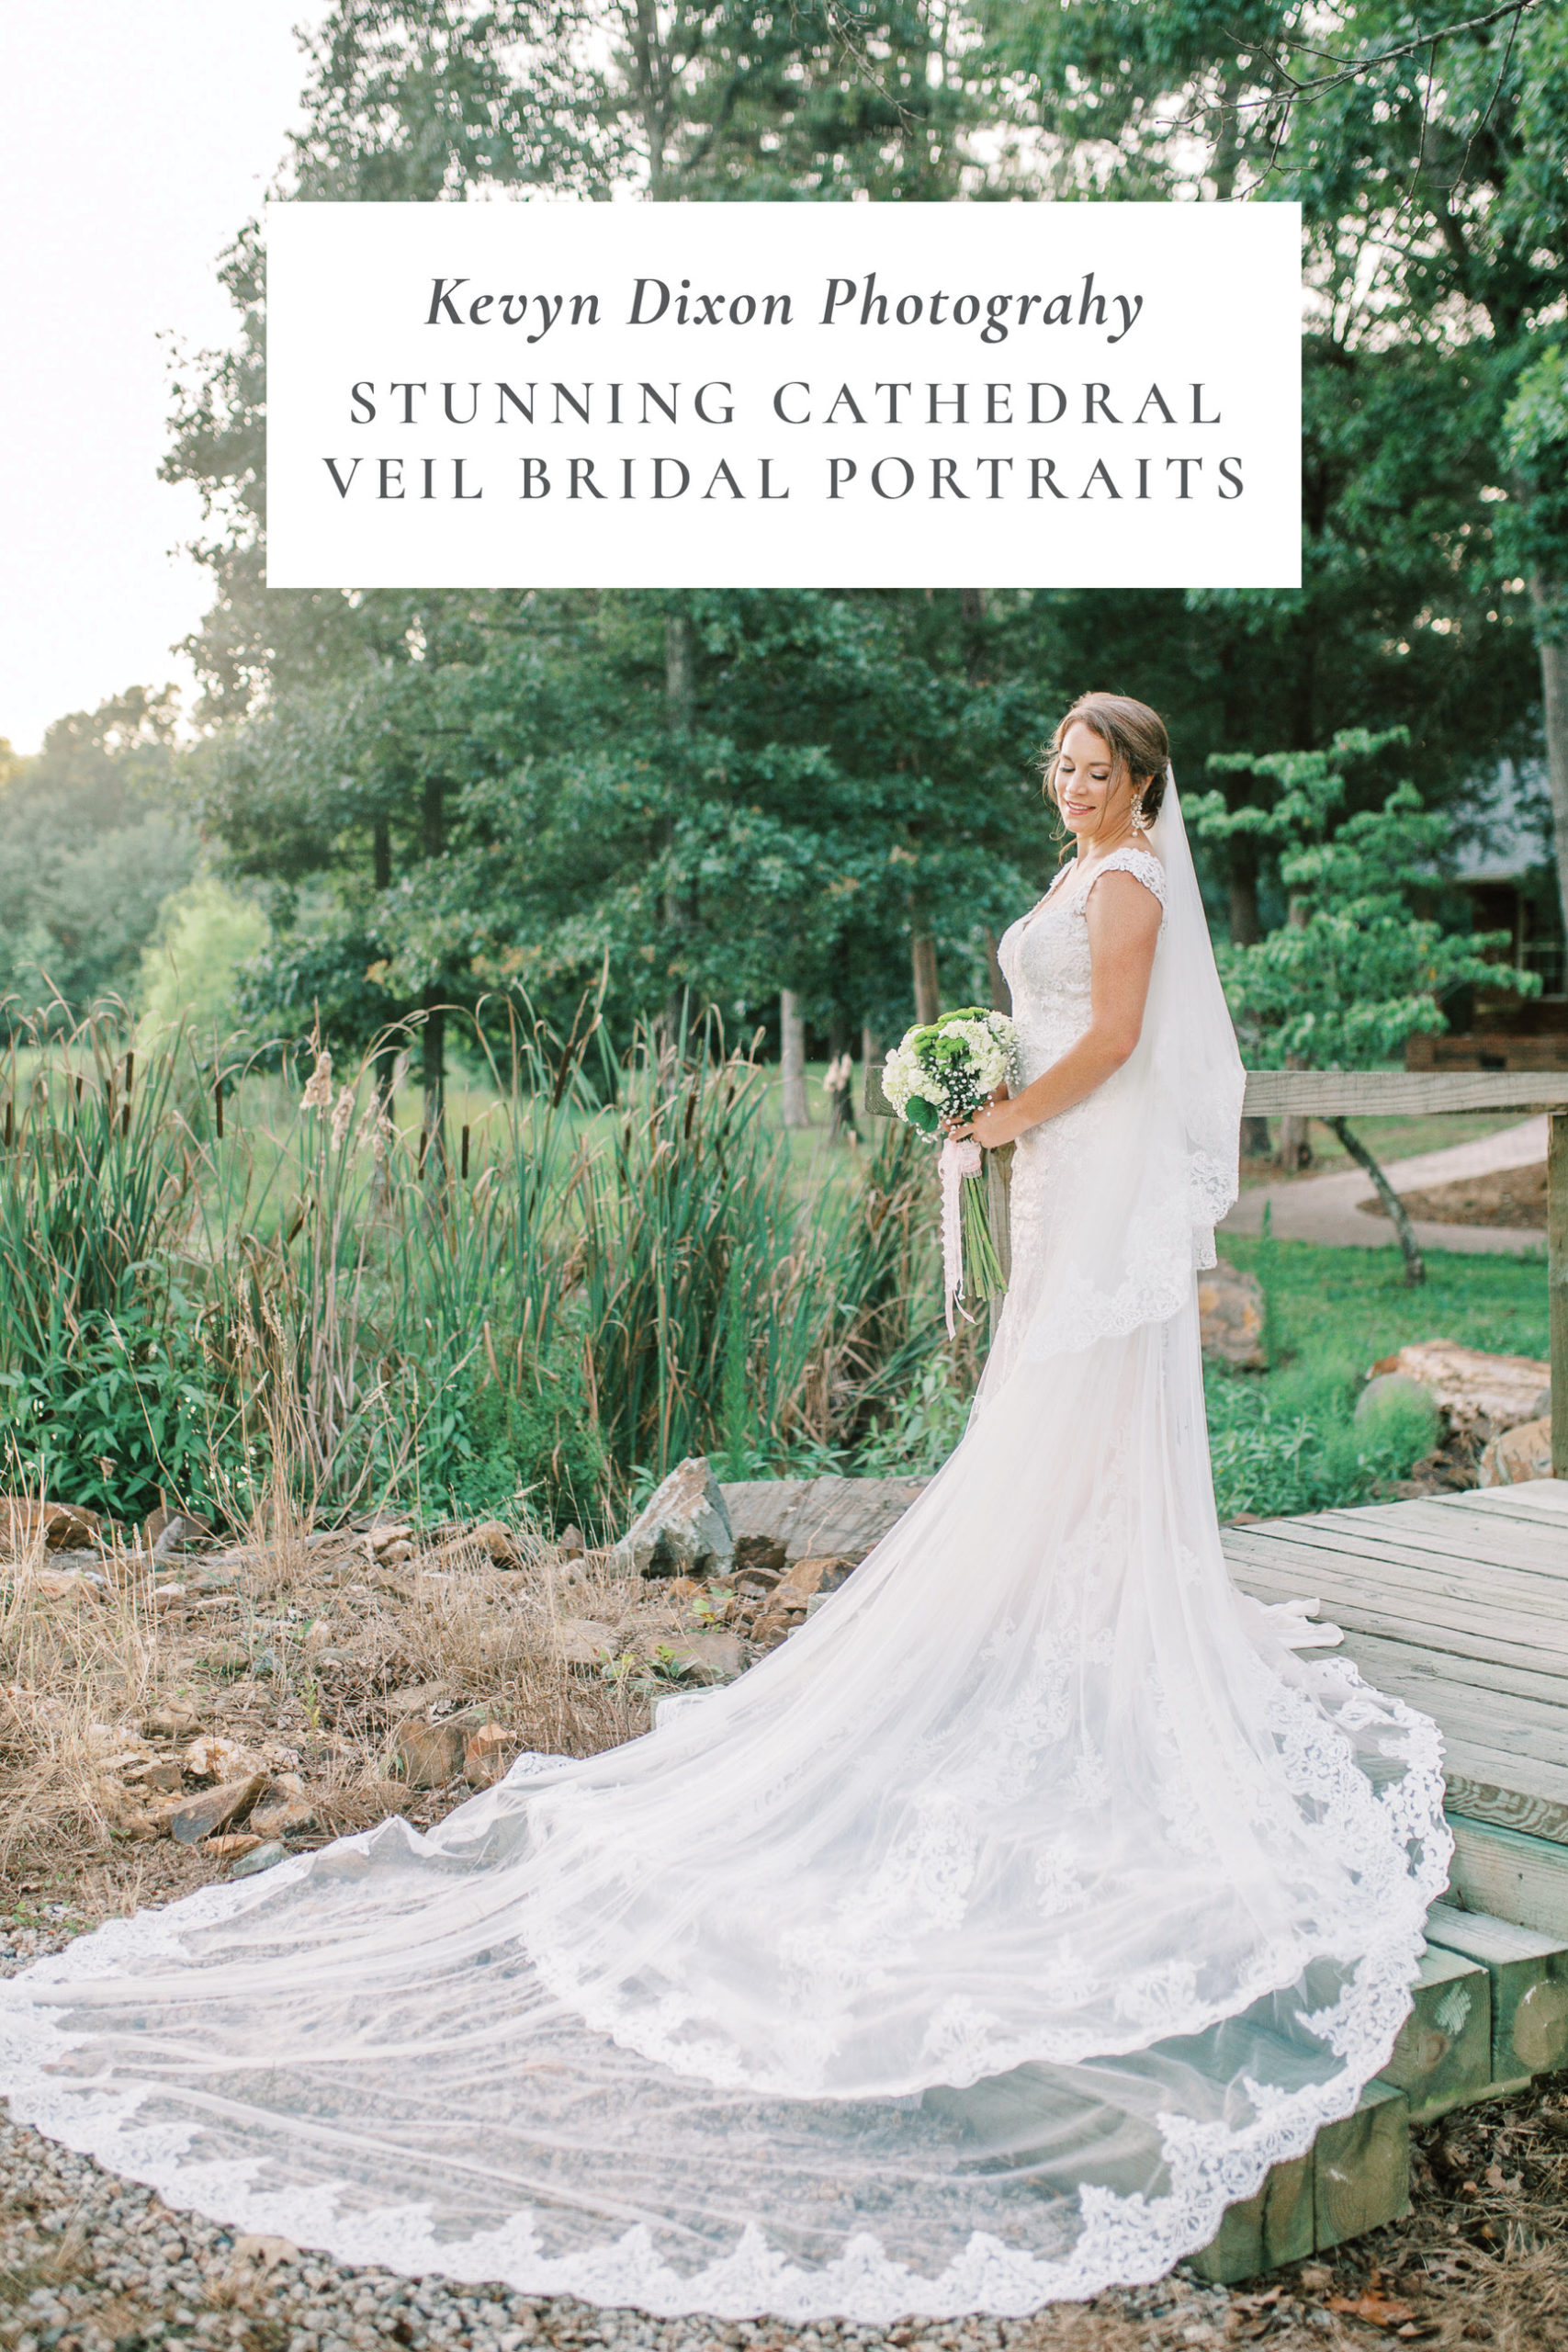 Stunning Cathedral Veil Bridal Portraits